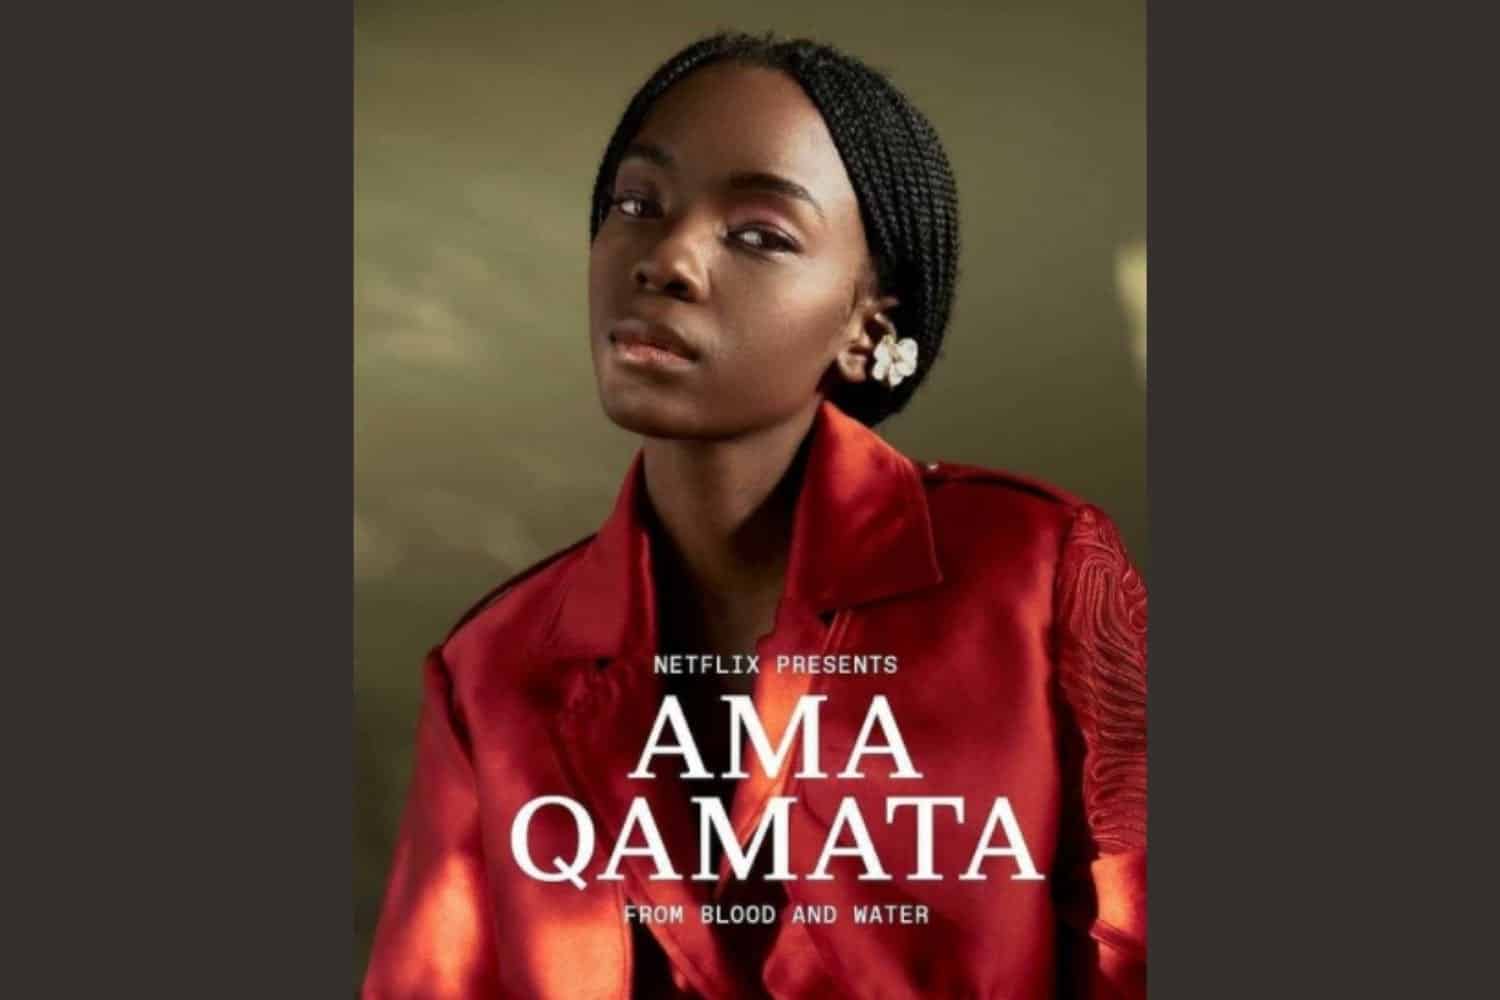 "Blood and Water" star Ama Qamata opens up about panic attack on set